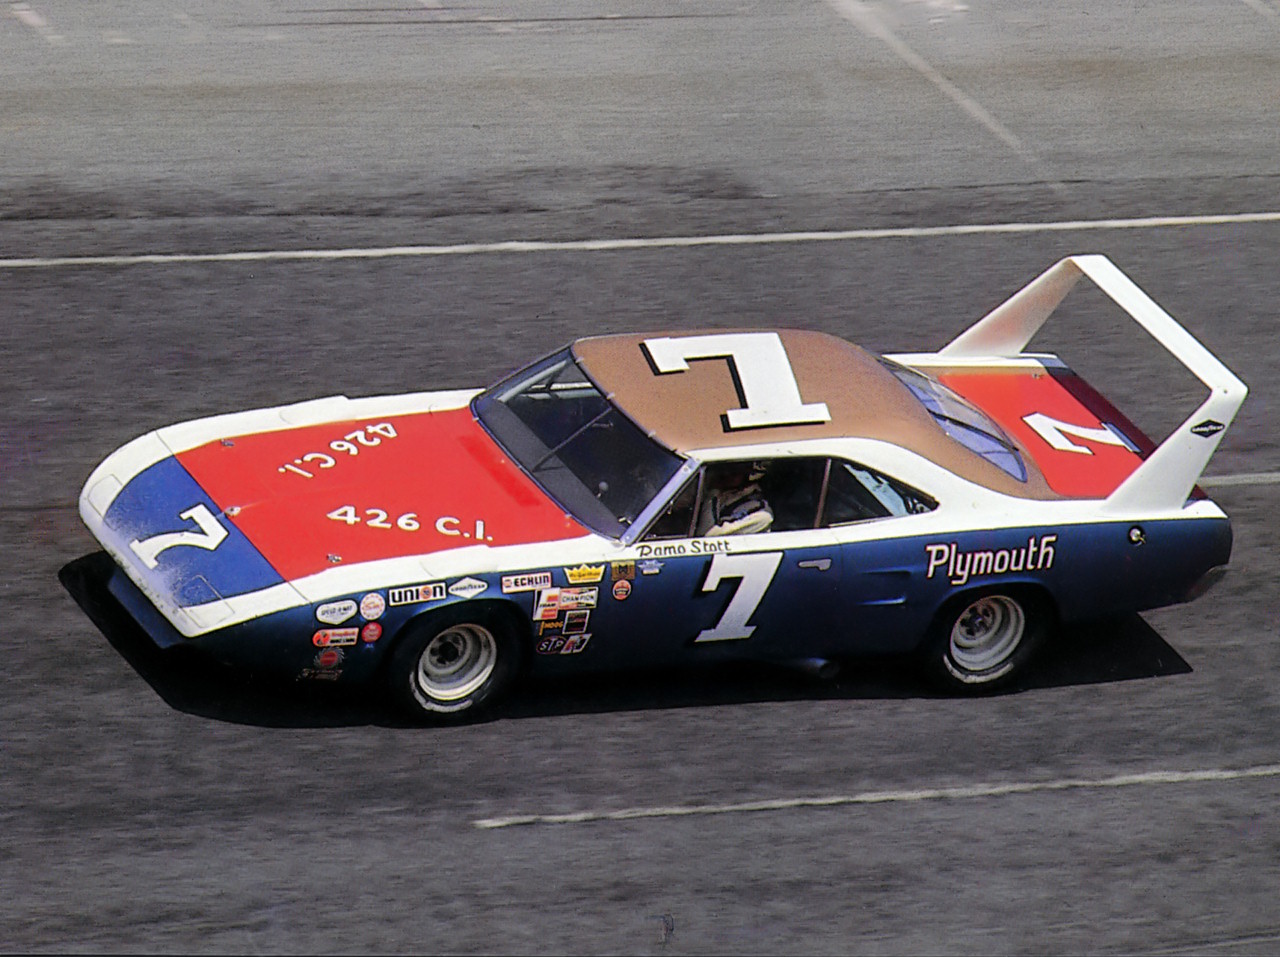 http://2.bp.blogspot.com/-WznvJj4R2r8/TeT2r01_UwI/AAAAAAAABQo/iVurZJOLFgw/s1600/1970-Plymouth-Road-Runner-Superbird-NASCAR-Race-Car-at-Speed-Driven-by-Ramo-Stott-Red_-White_-_amp_-Gold-fsv.jpg